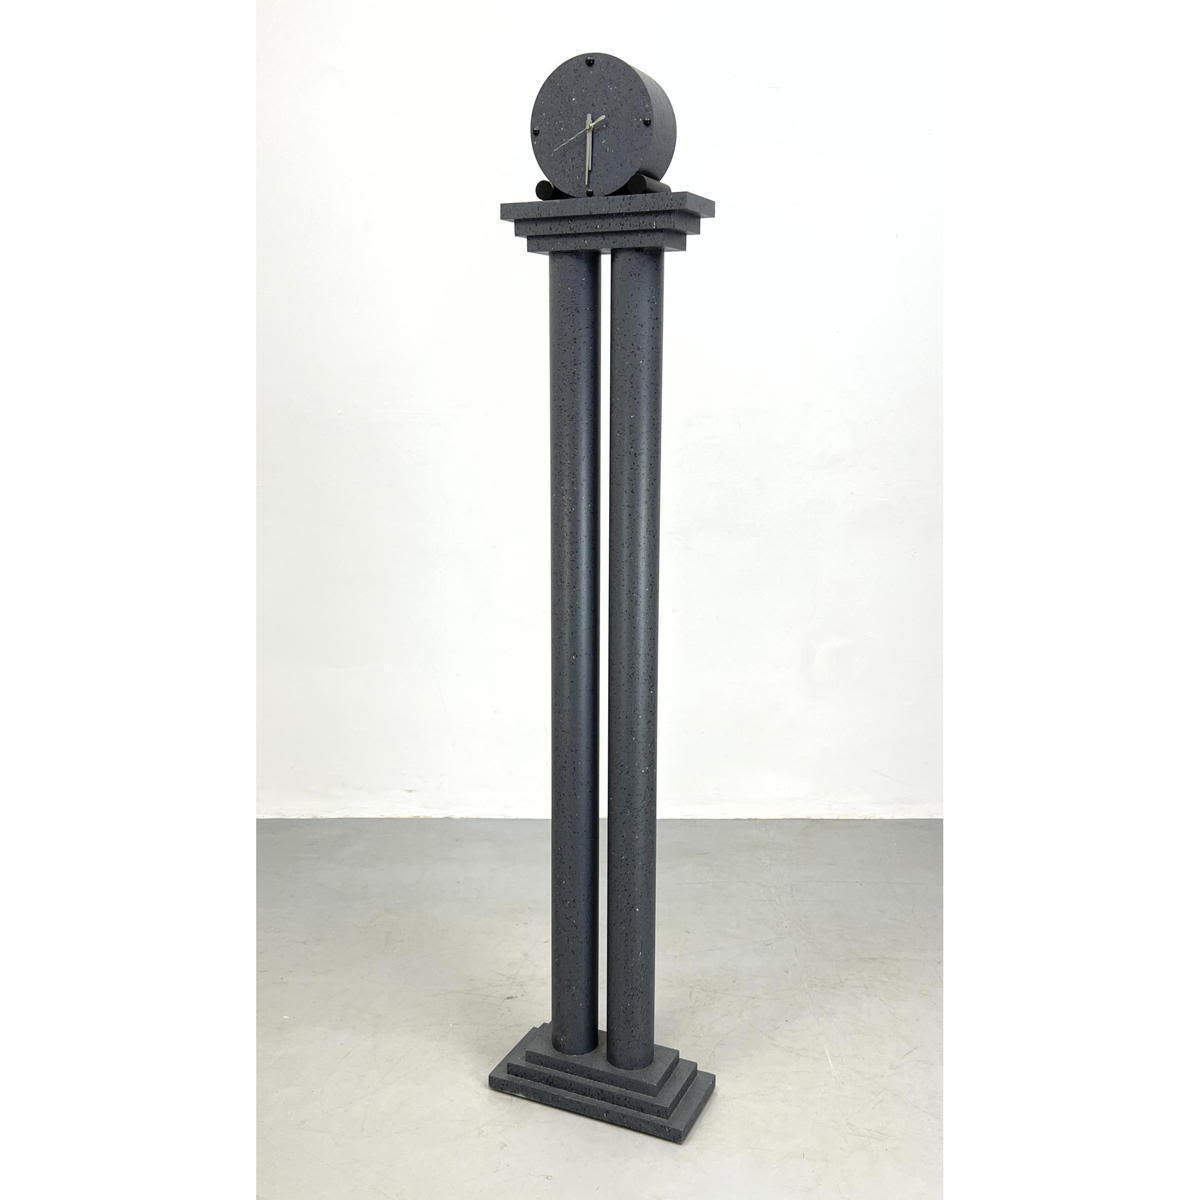 Memphis style tall column clock.